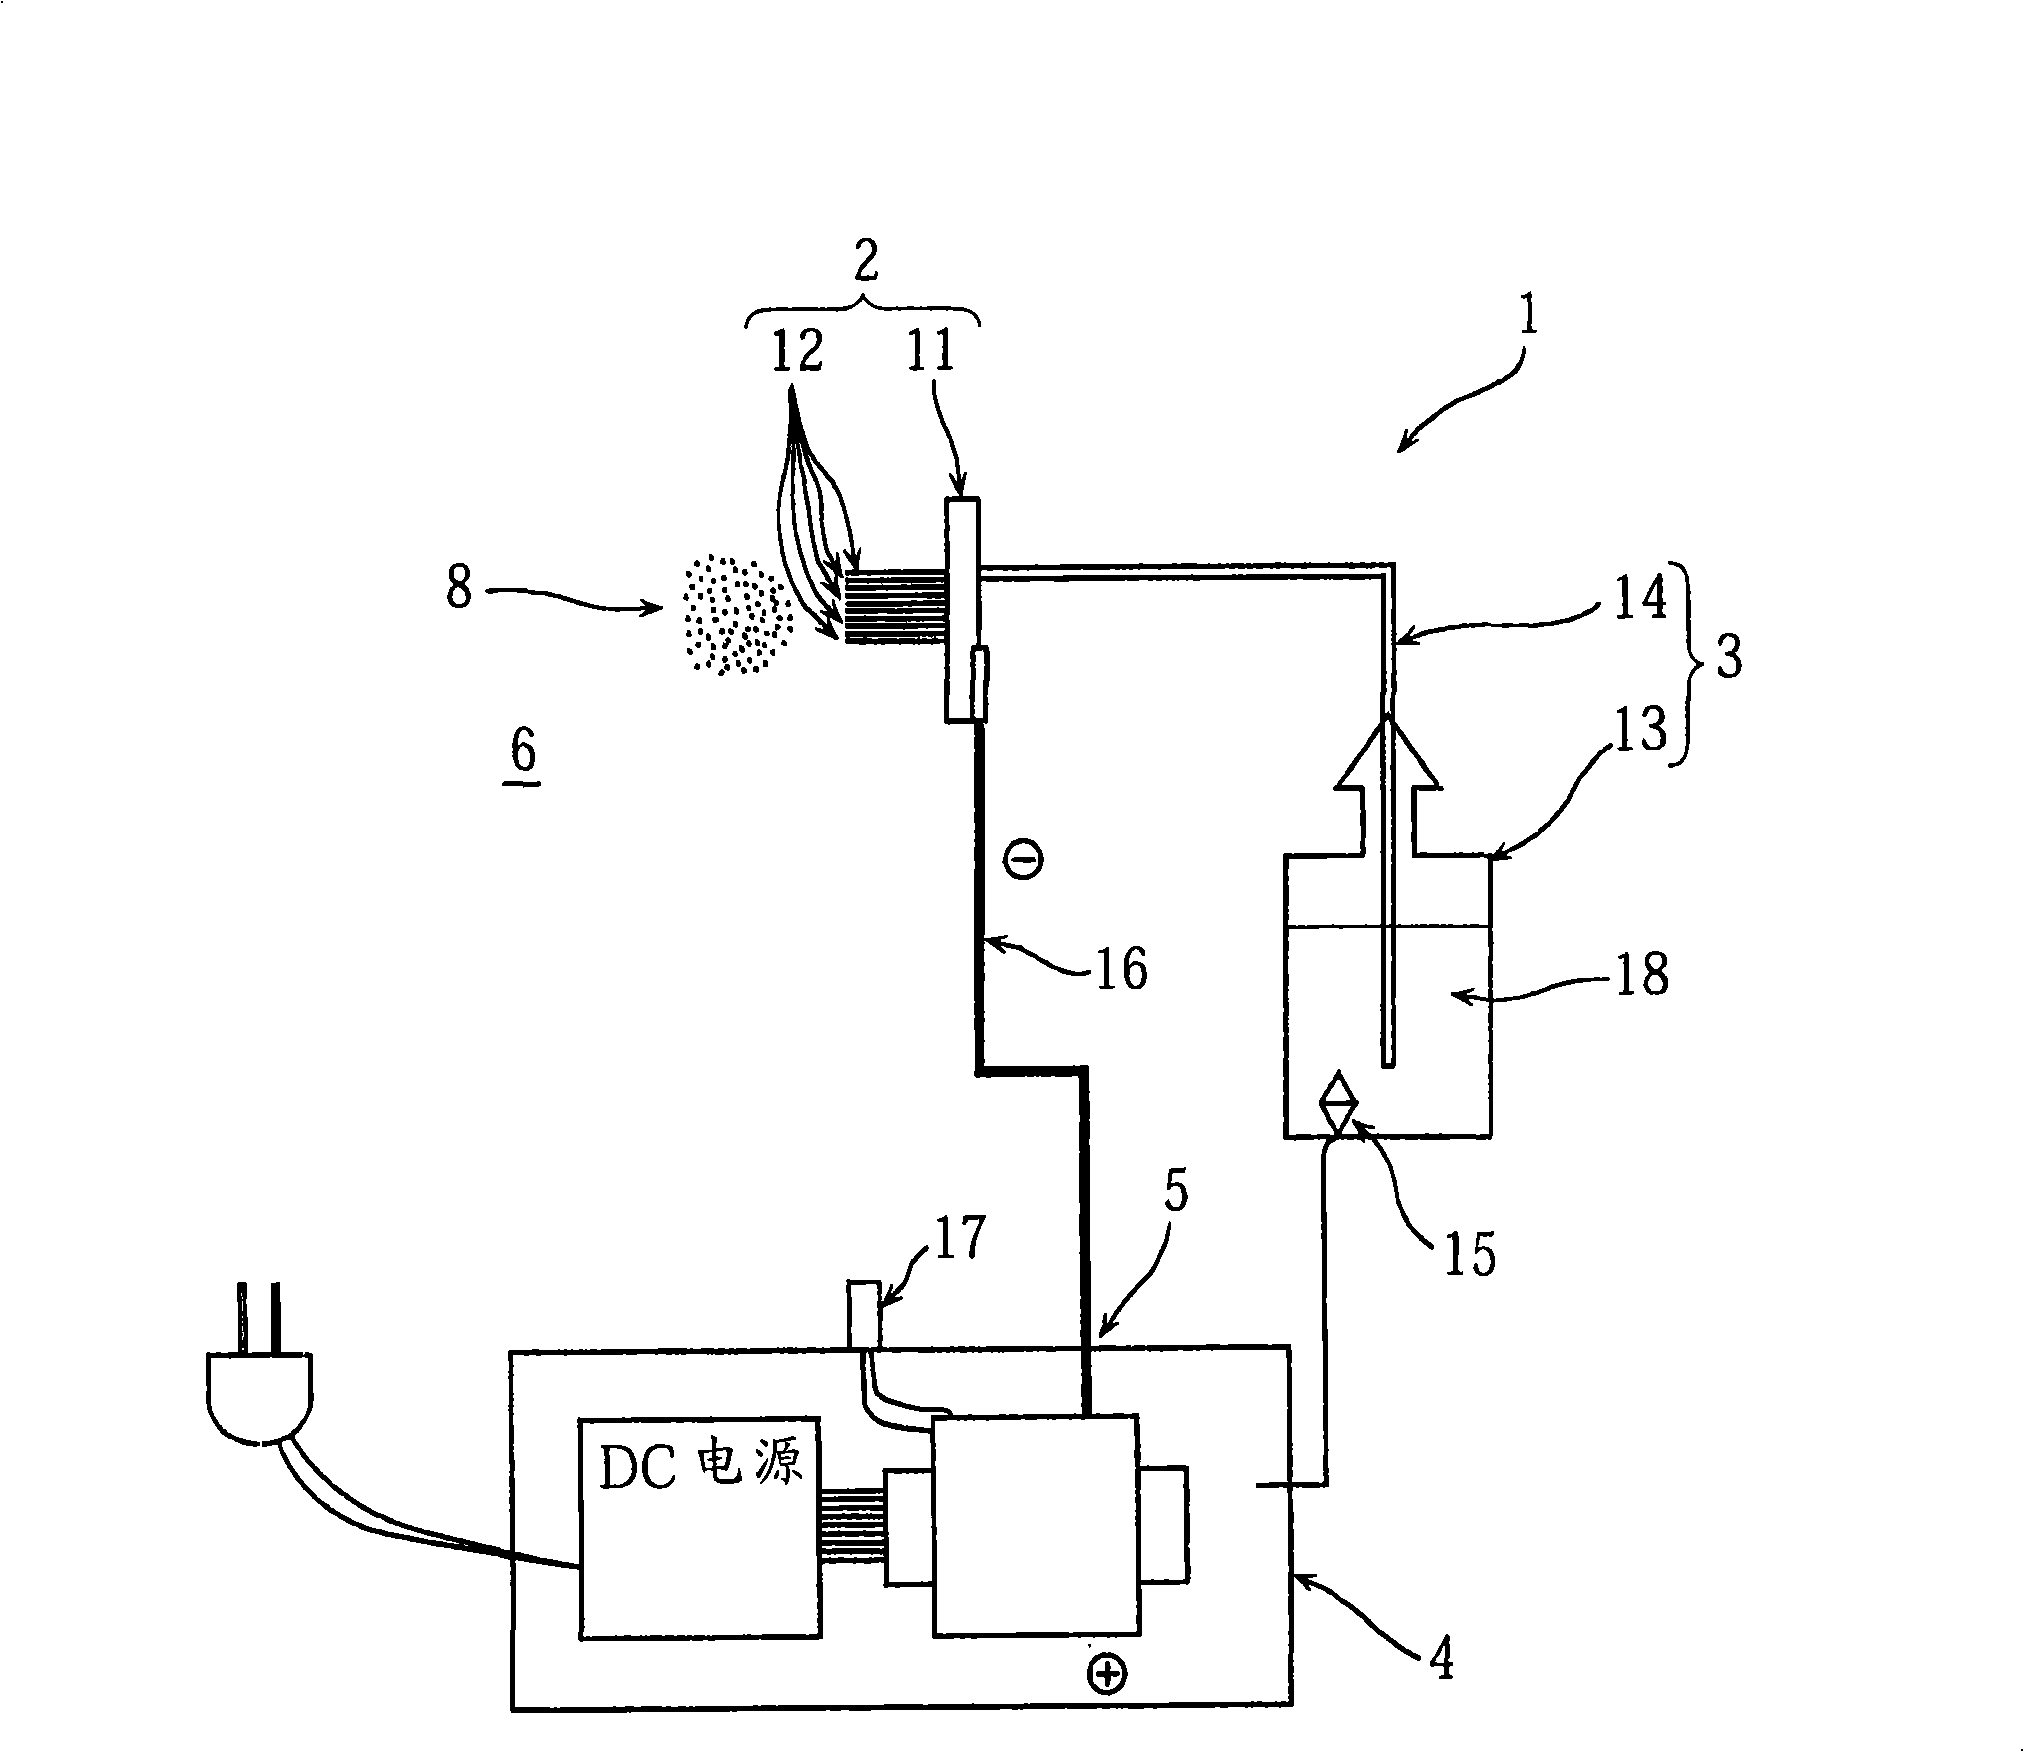 Electrostatic atomization apparatus